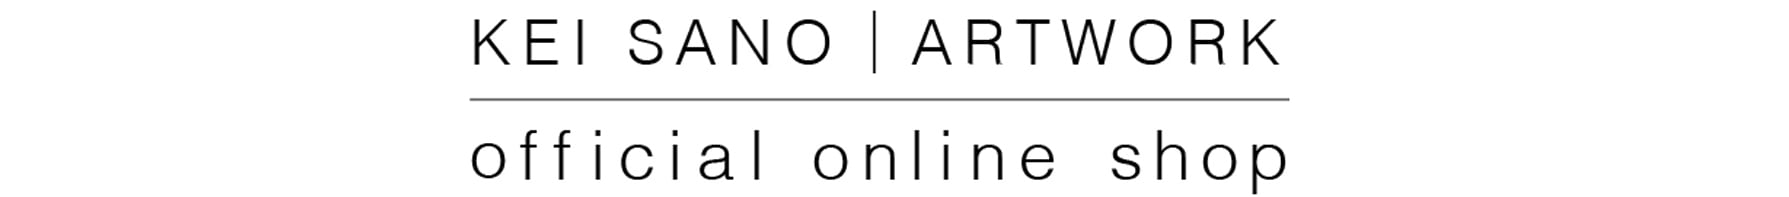 KEI SANO ARTWORK online shop